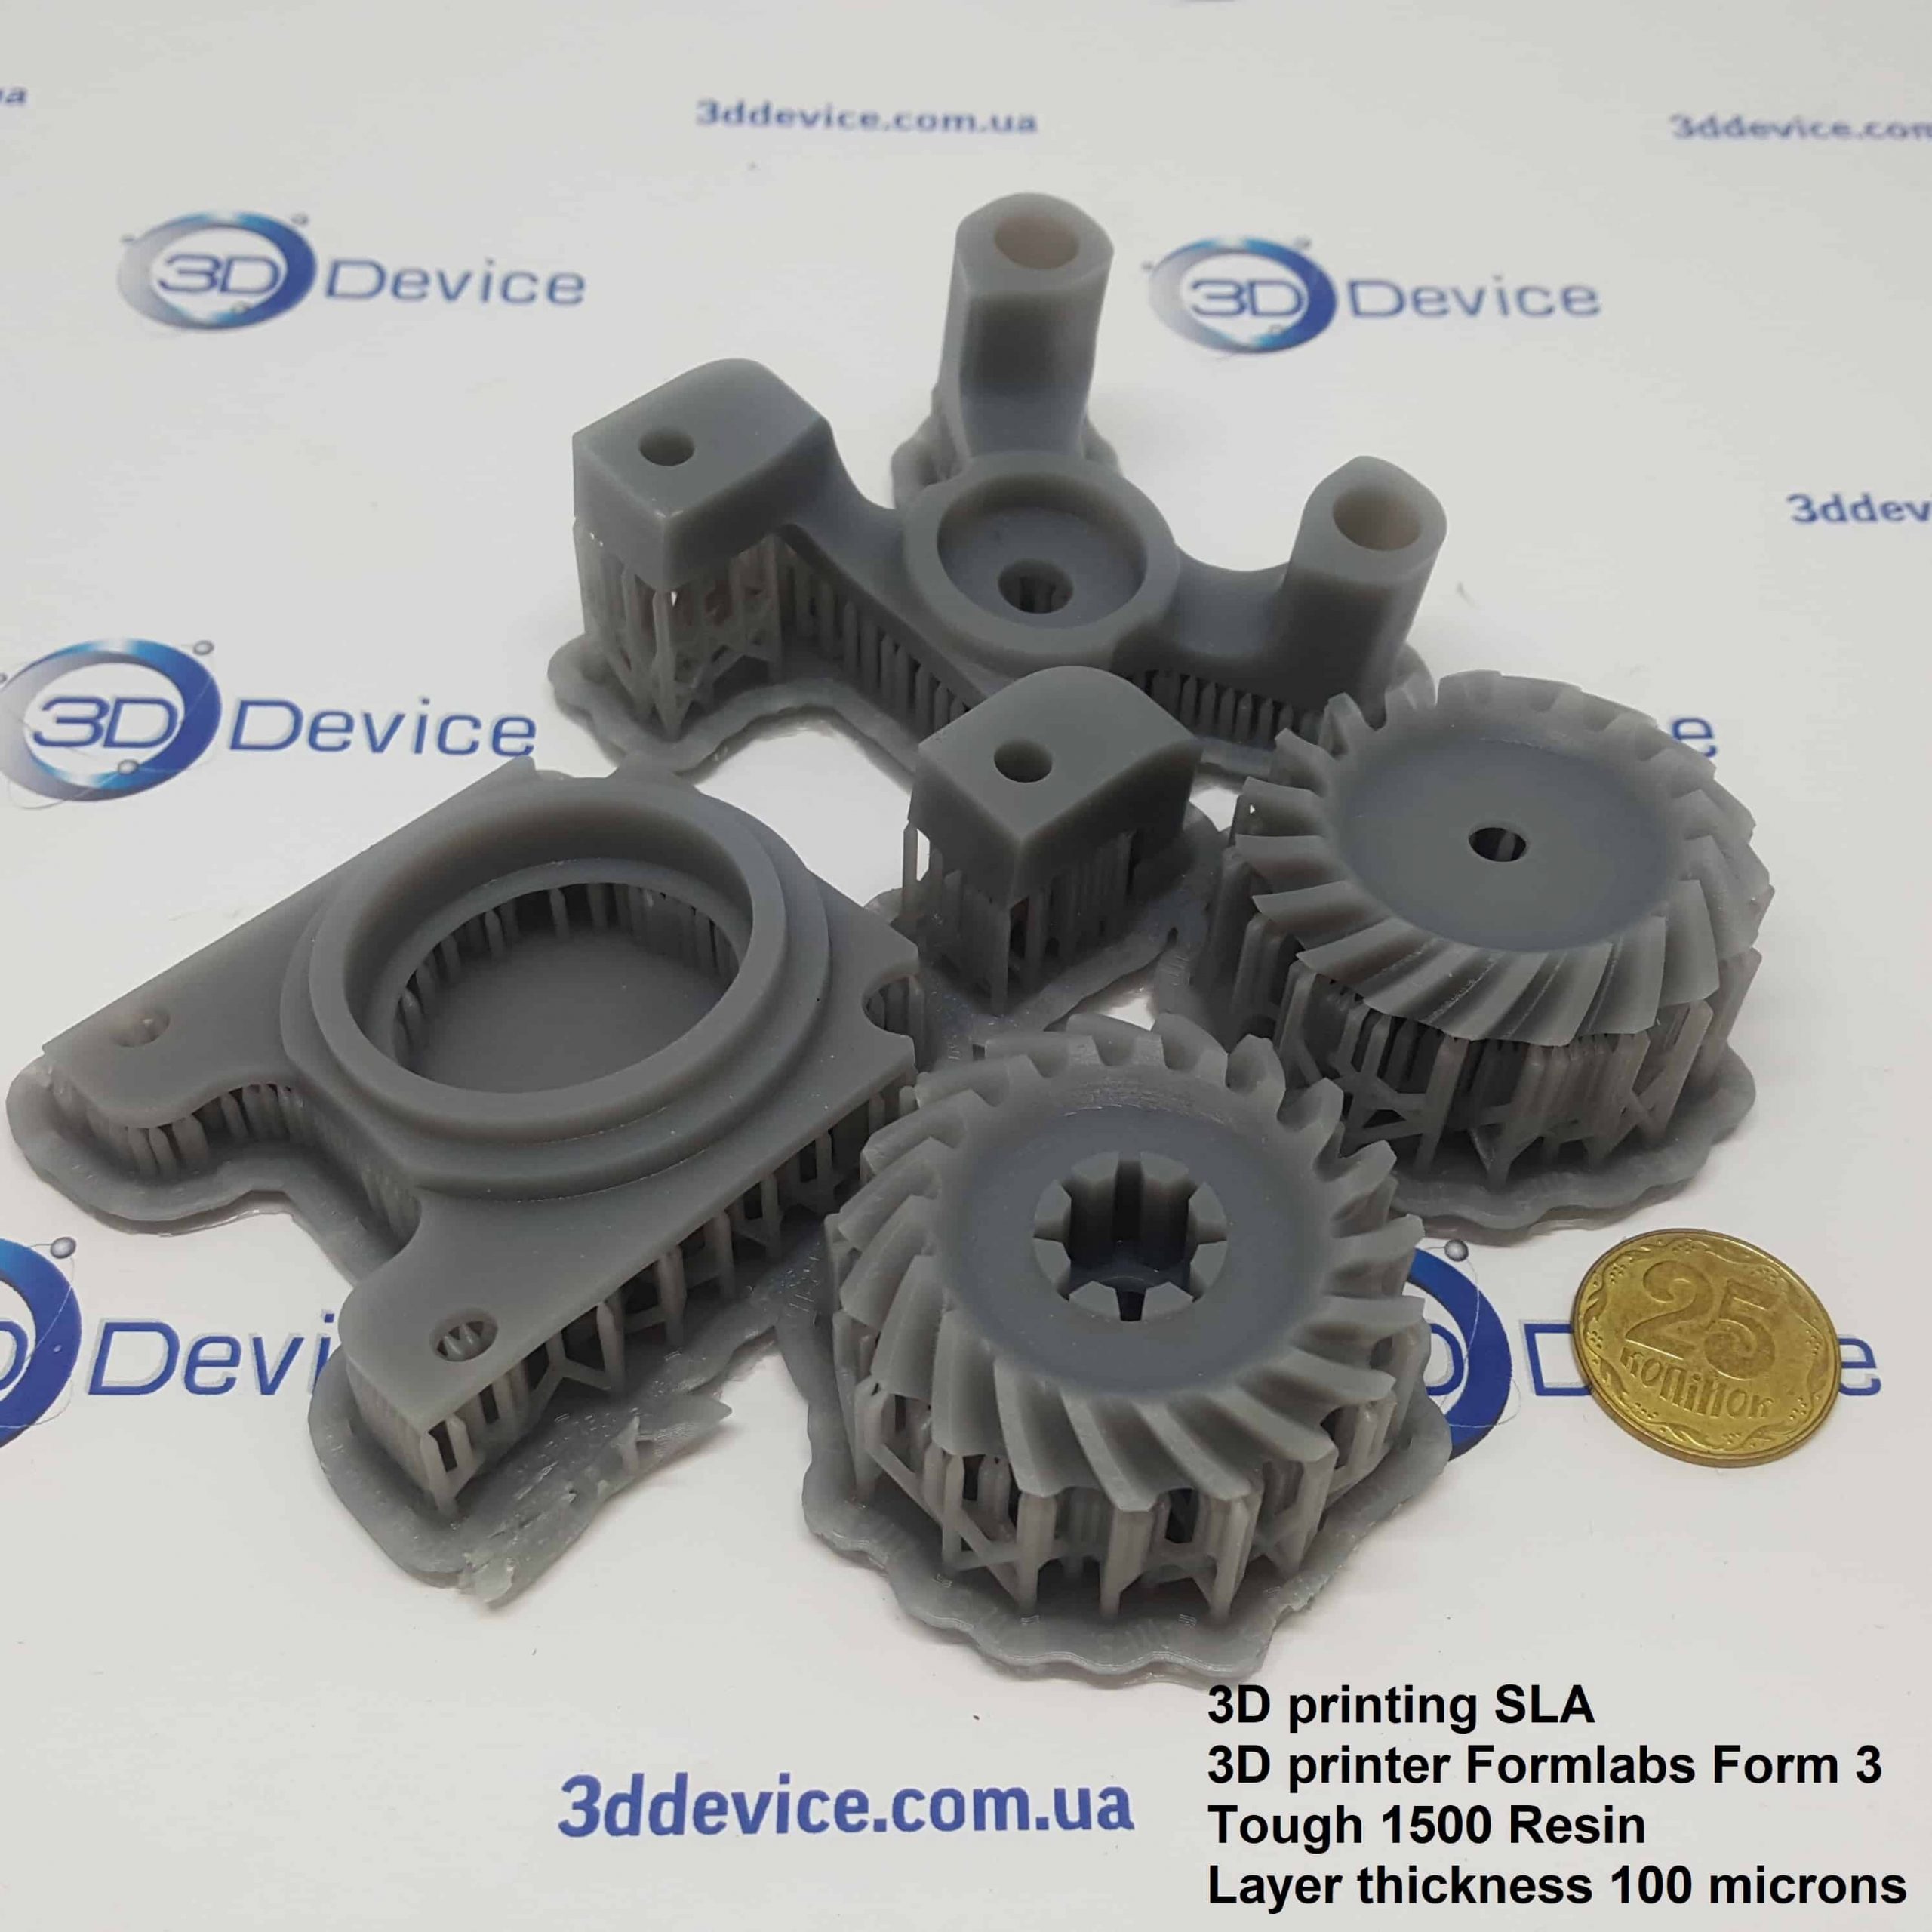 Formlabs Tough 1500 Resin beautiful 3D printed gear parts